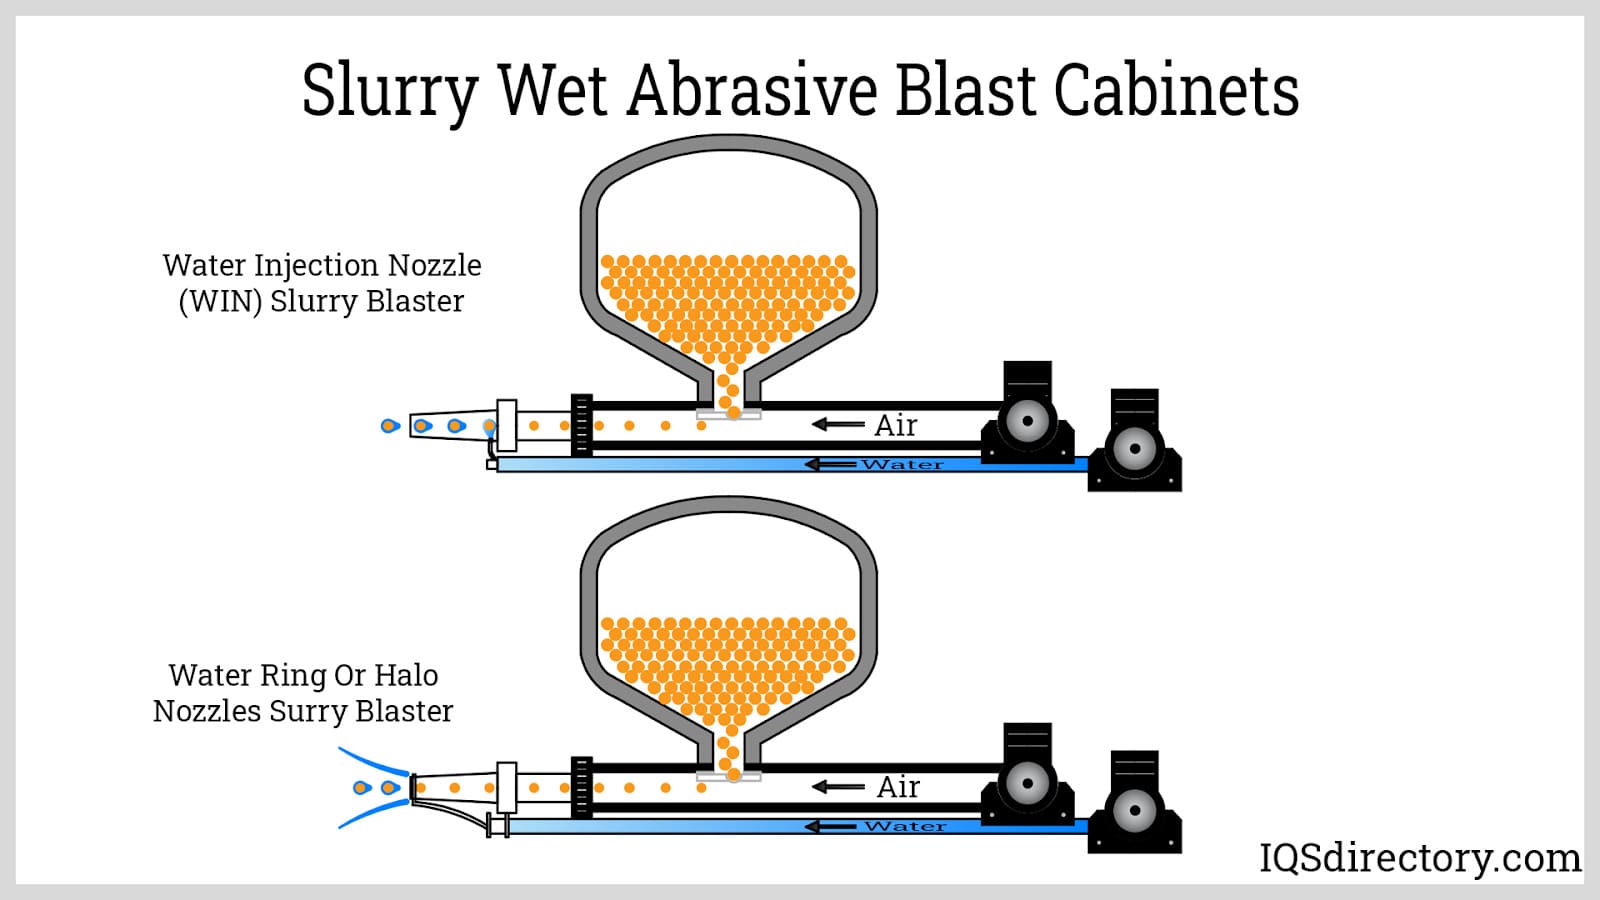 Slurry Wet Abrasive Blast Cabinets